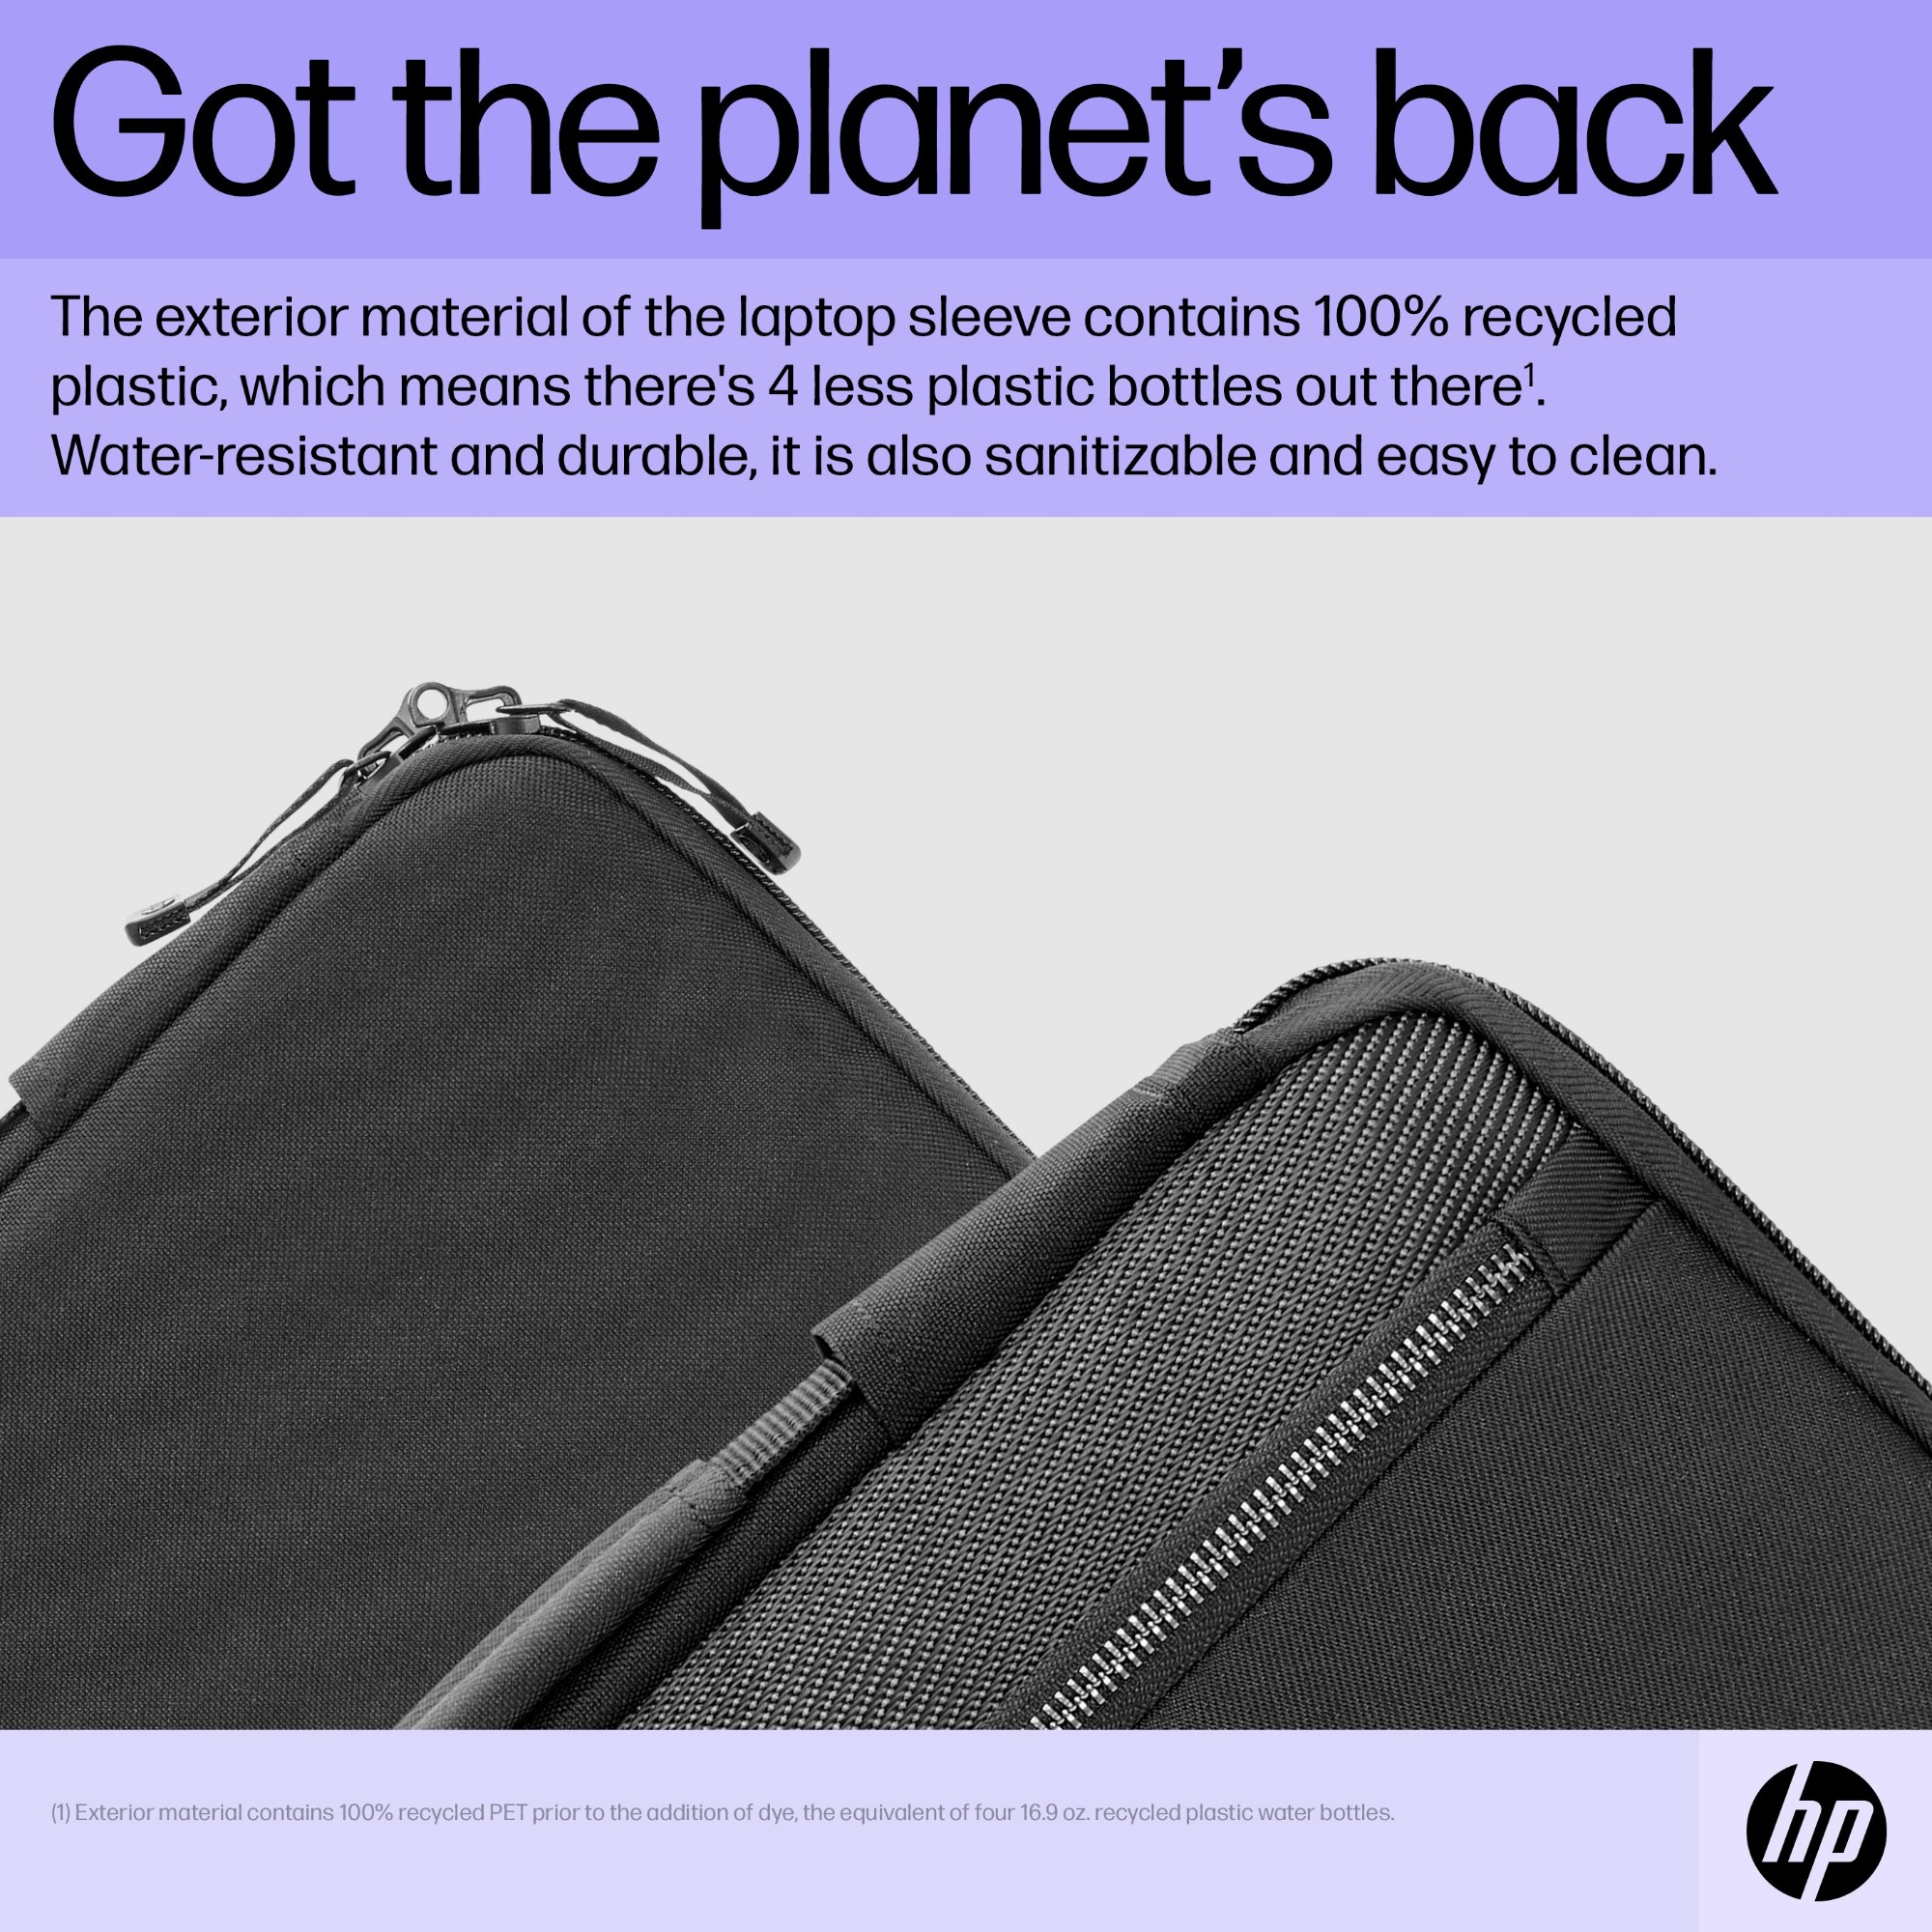 HP Renew Executive 14-inch Laptop Sleeve